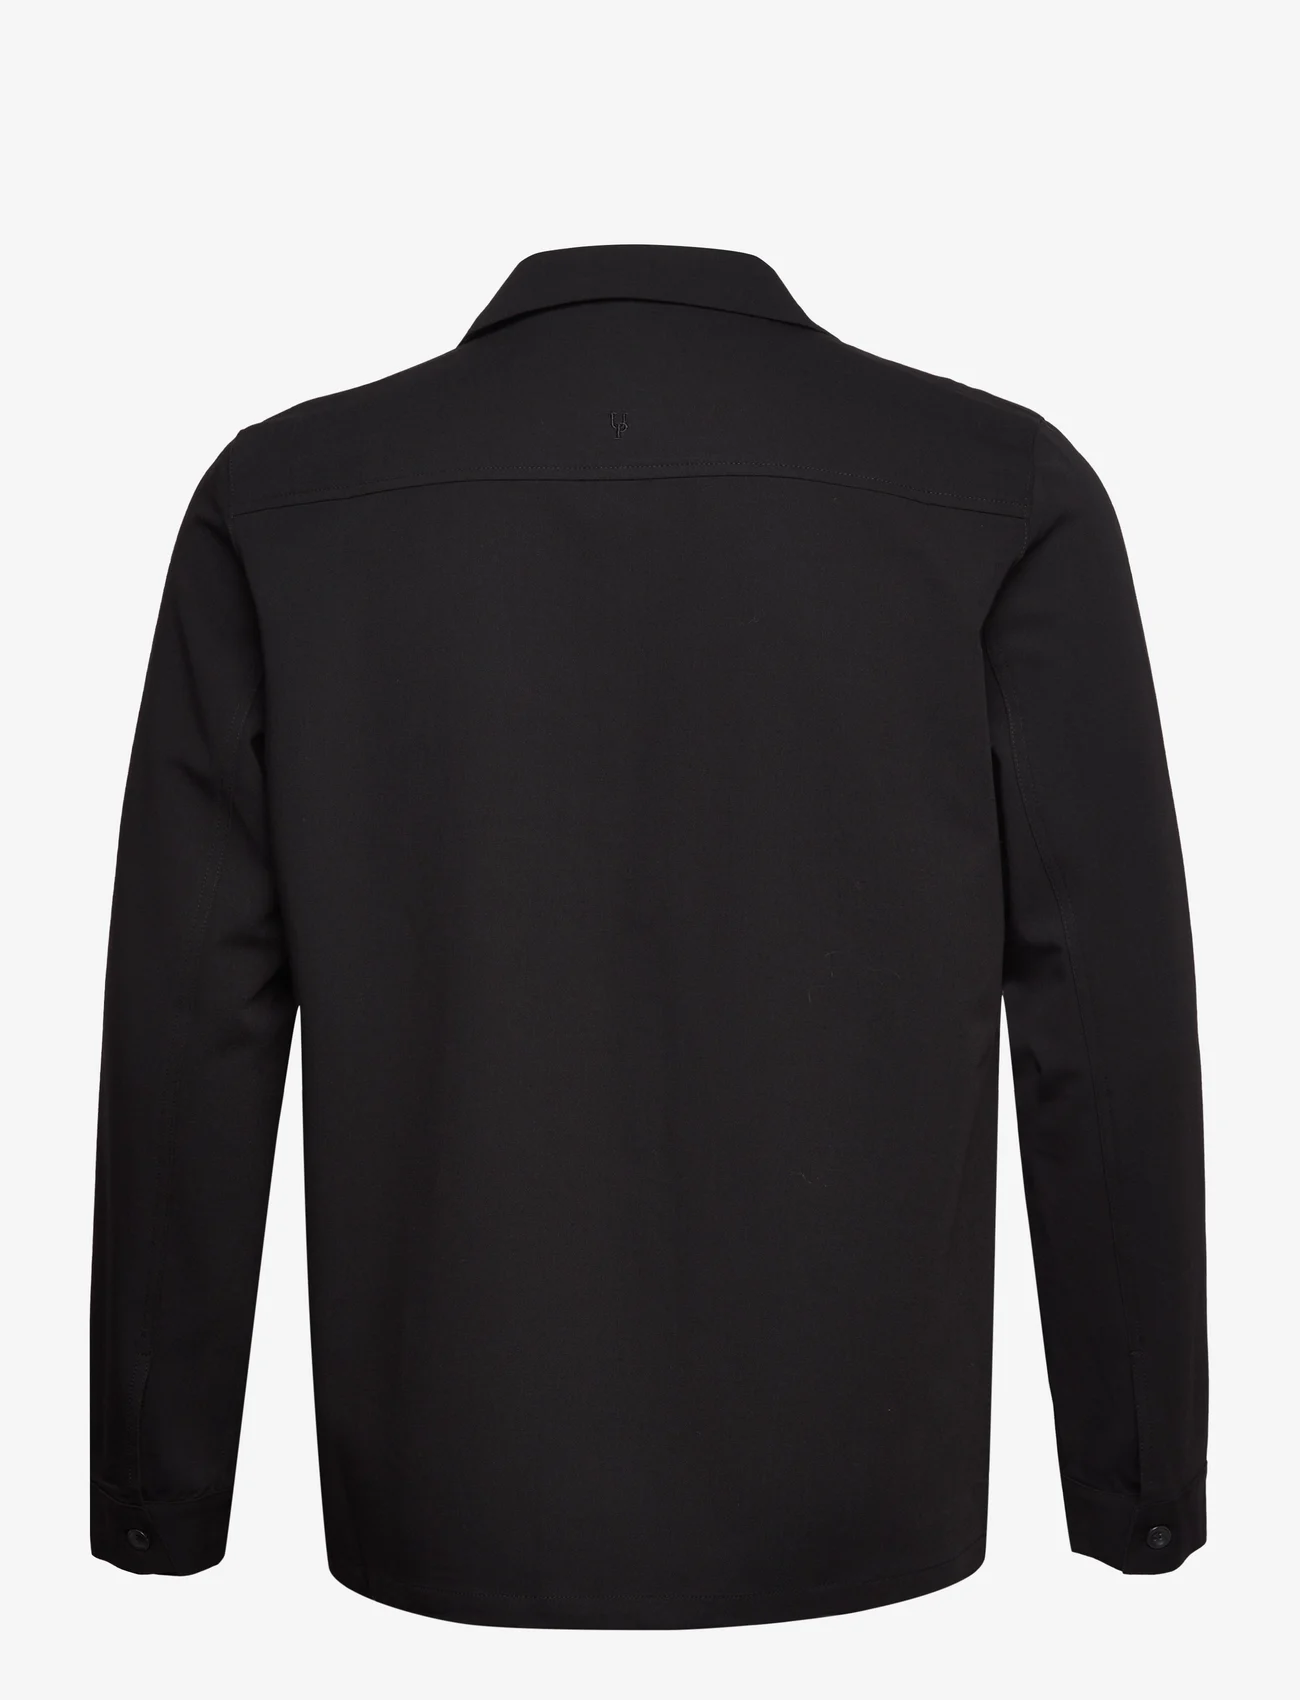 Urban Pioneers - Andreas Shirt - basic skjorter - black - 1